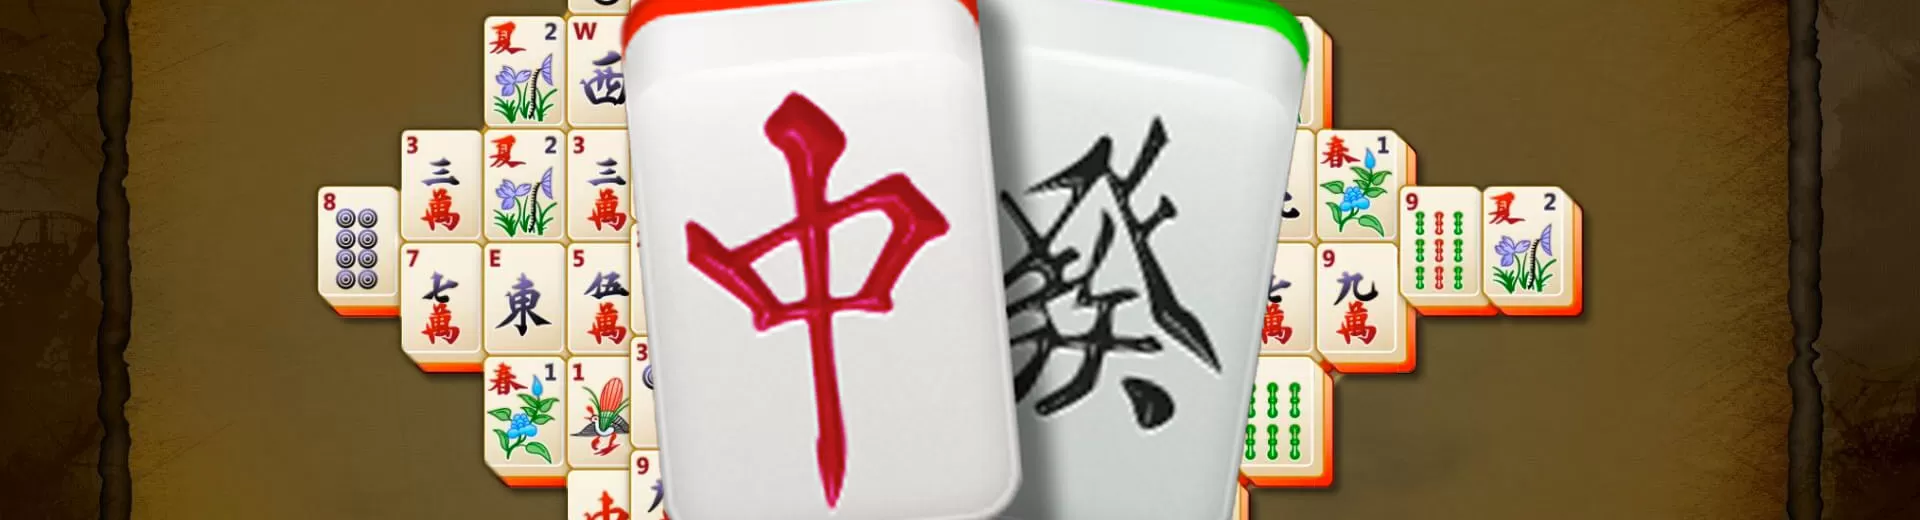 Mahjong Solitaire Emulator Pc